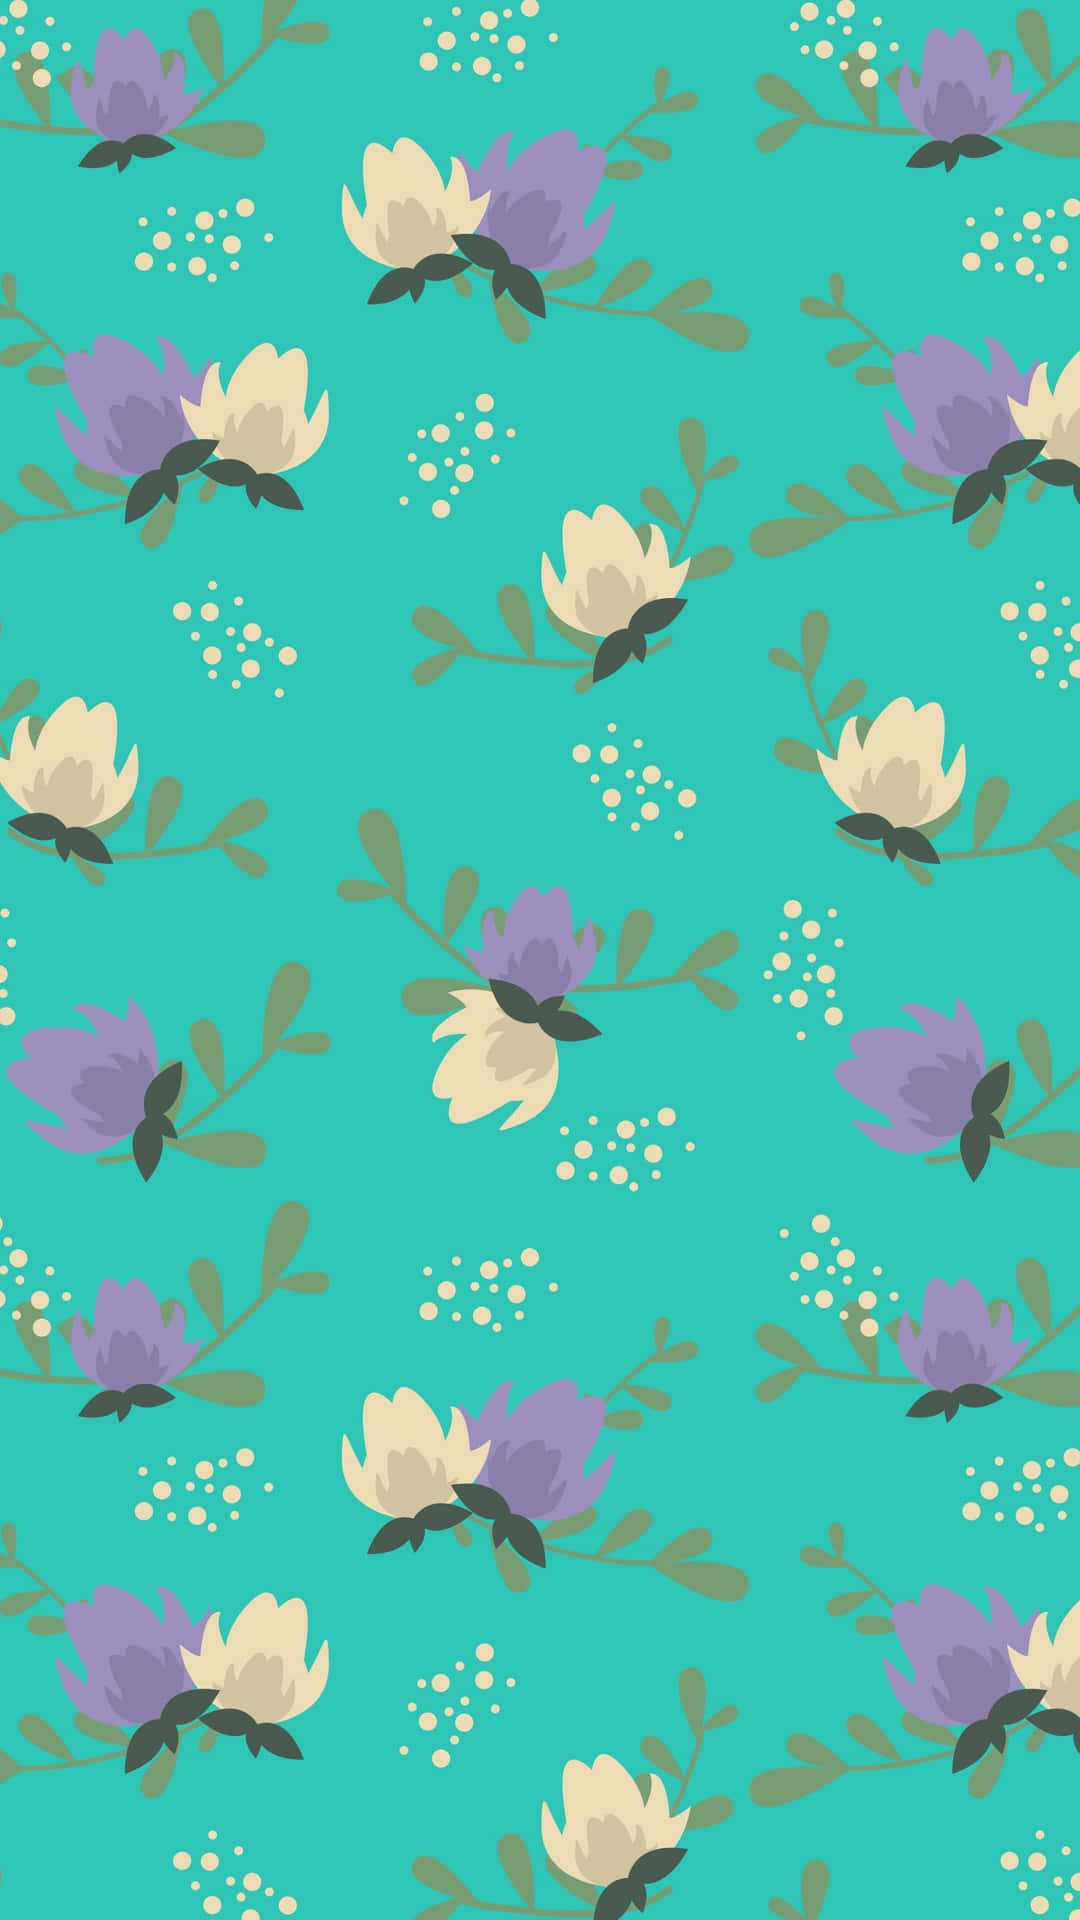 Kawaii Flower: A Cute and Adorable Blossom Wallpaper